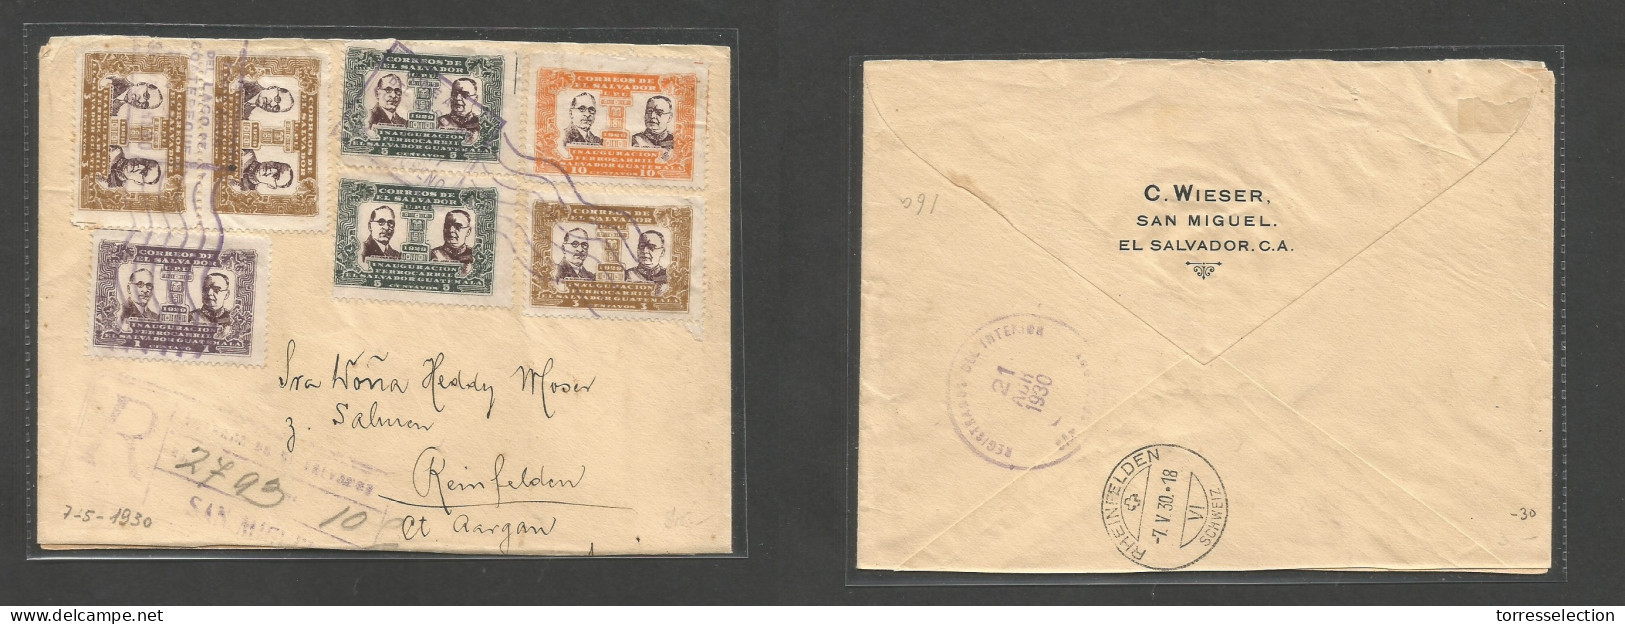 SALVADOR, EL. 1930 (21 April) San Miguel - Switzerland, Reinfelden (7 May) Registered Multifkd Comm Issue. Railway Inaug - El Salvador